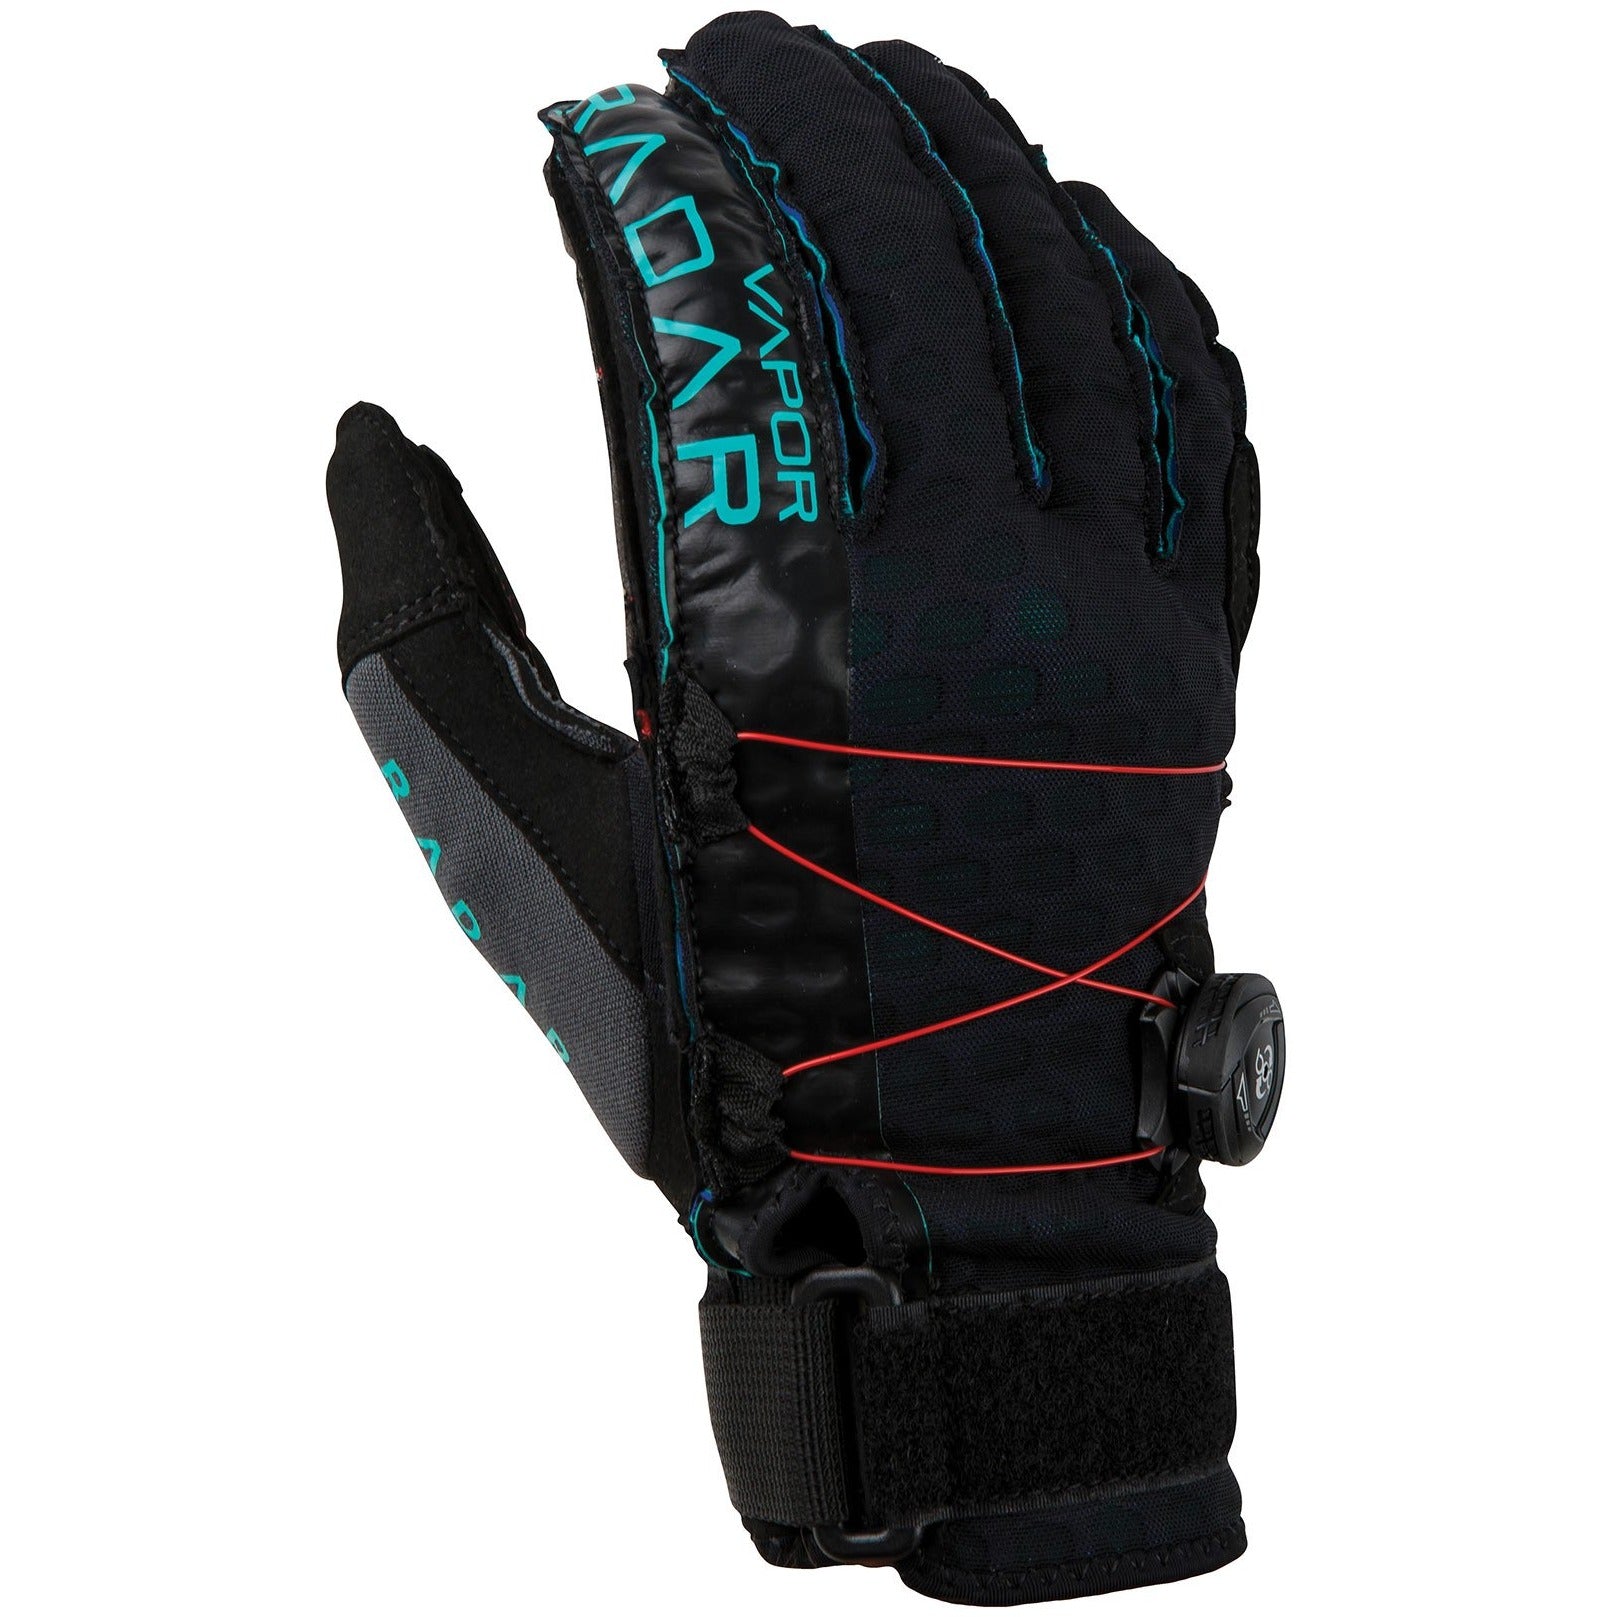 Radar Vapor BOA K Water Ski Gloves 2018 - 88 Gear